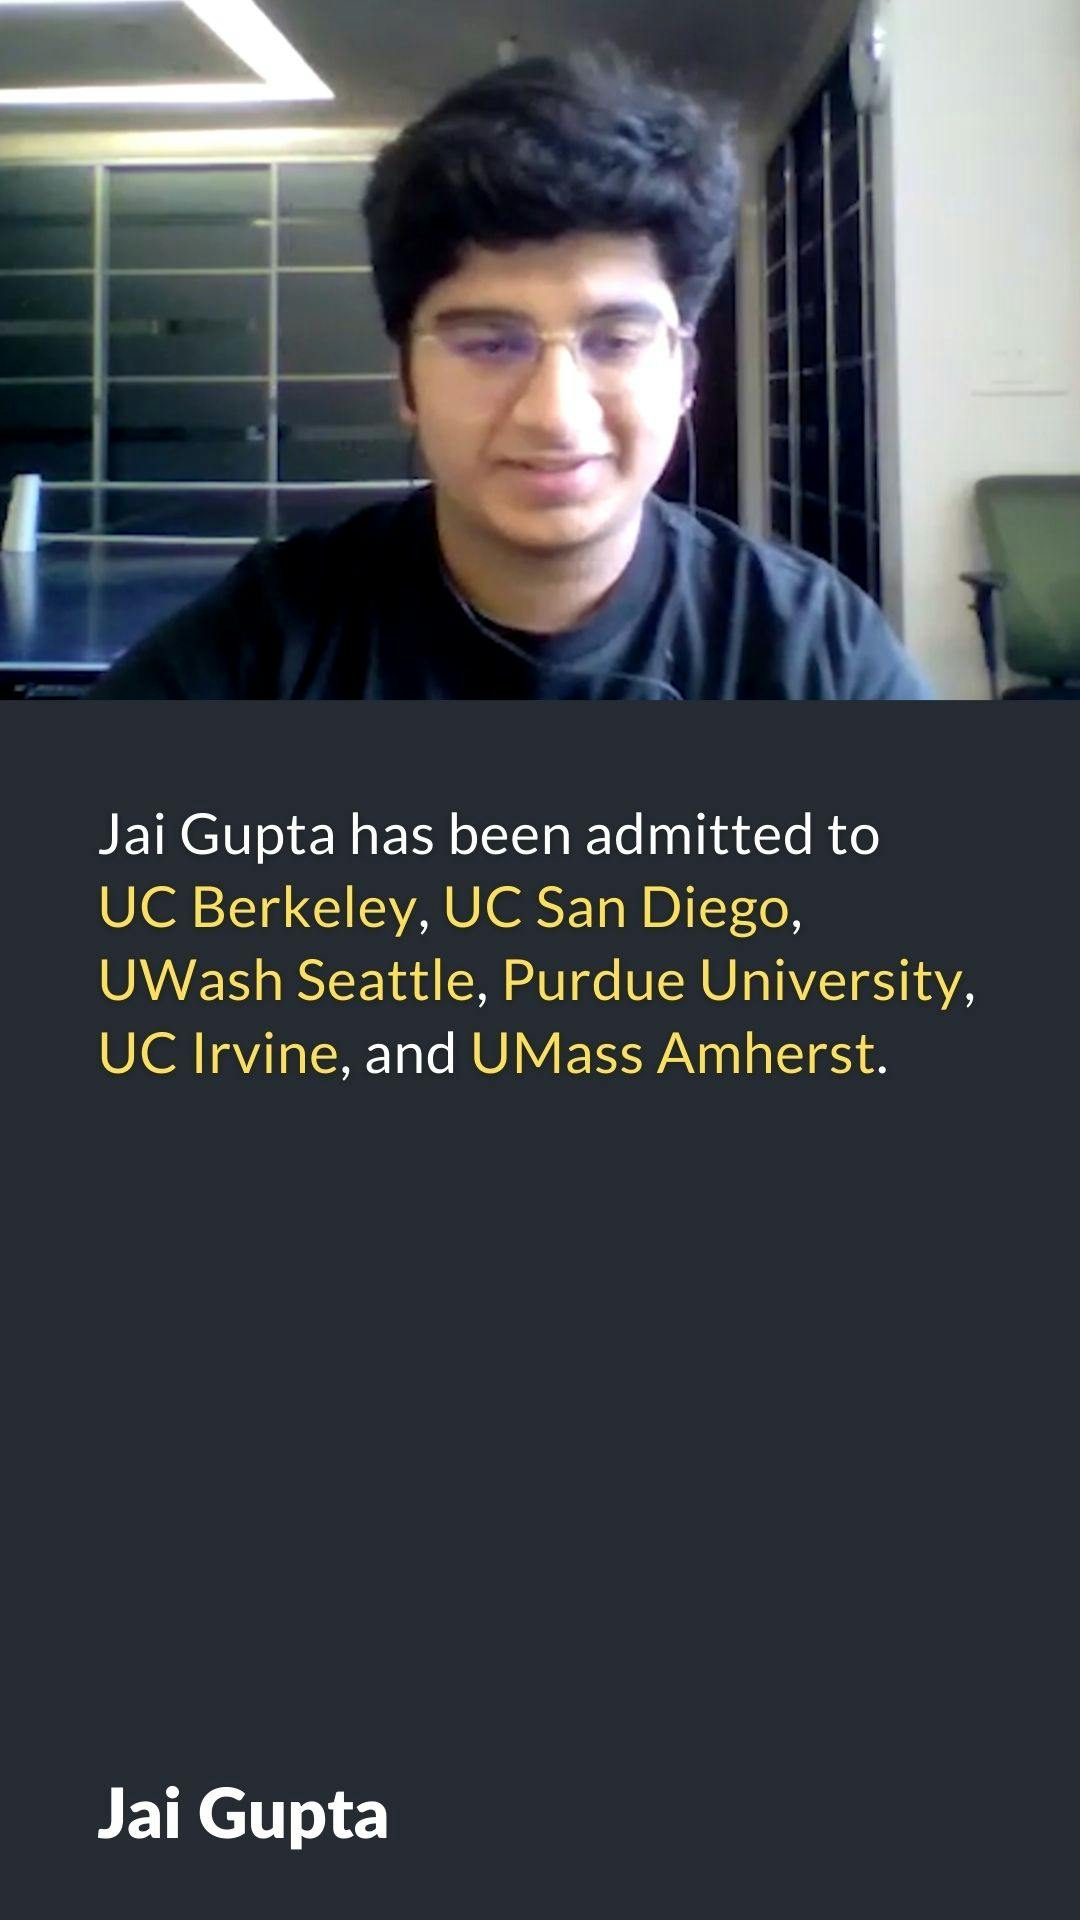 Jai Gupta has admitted to UC Berkeley etc.